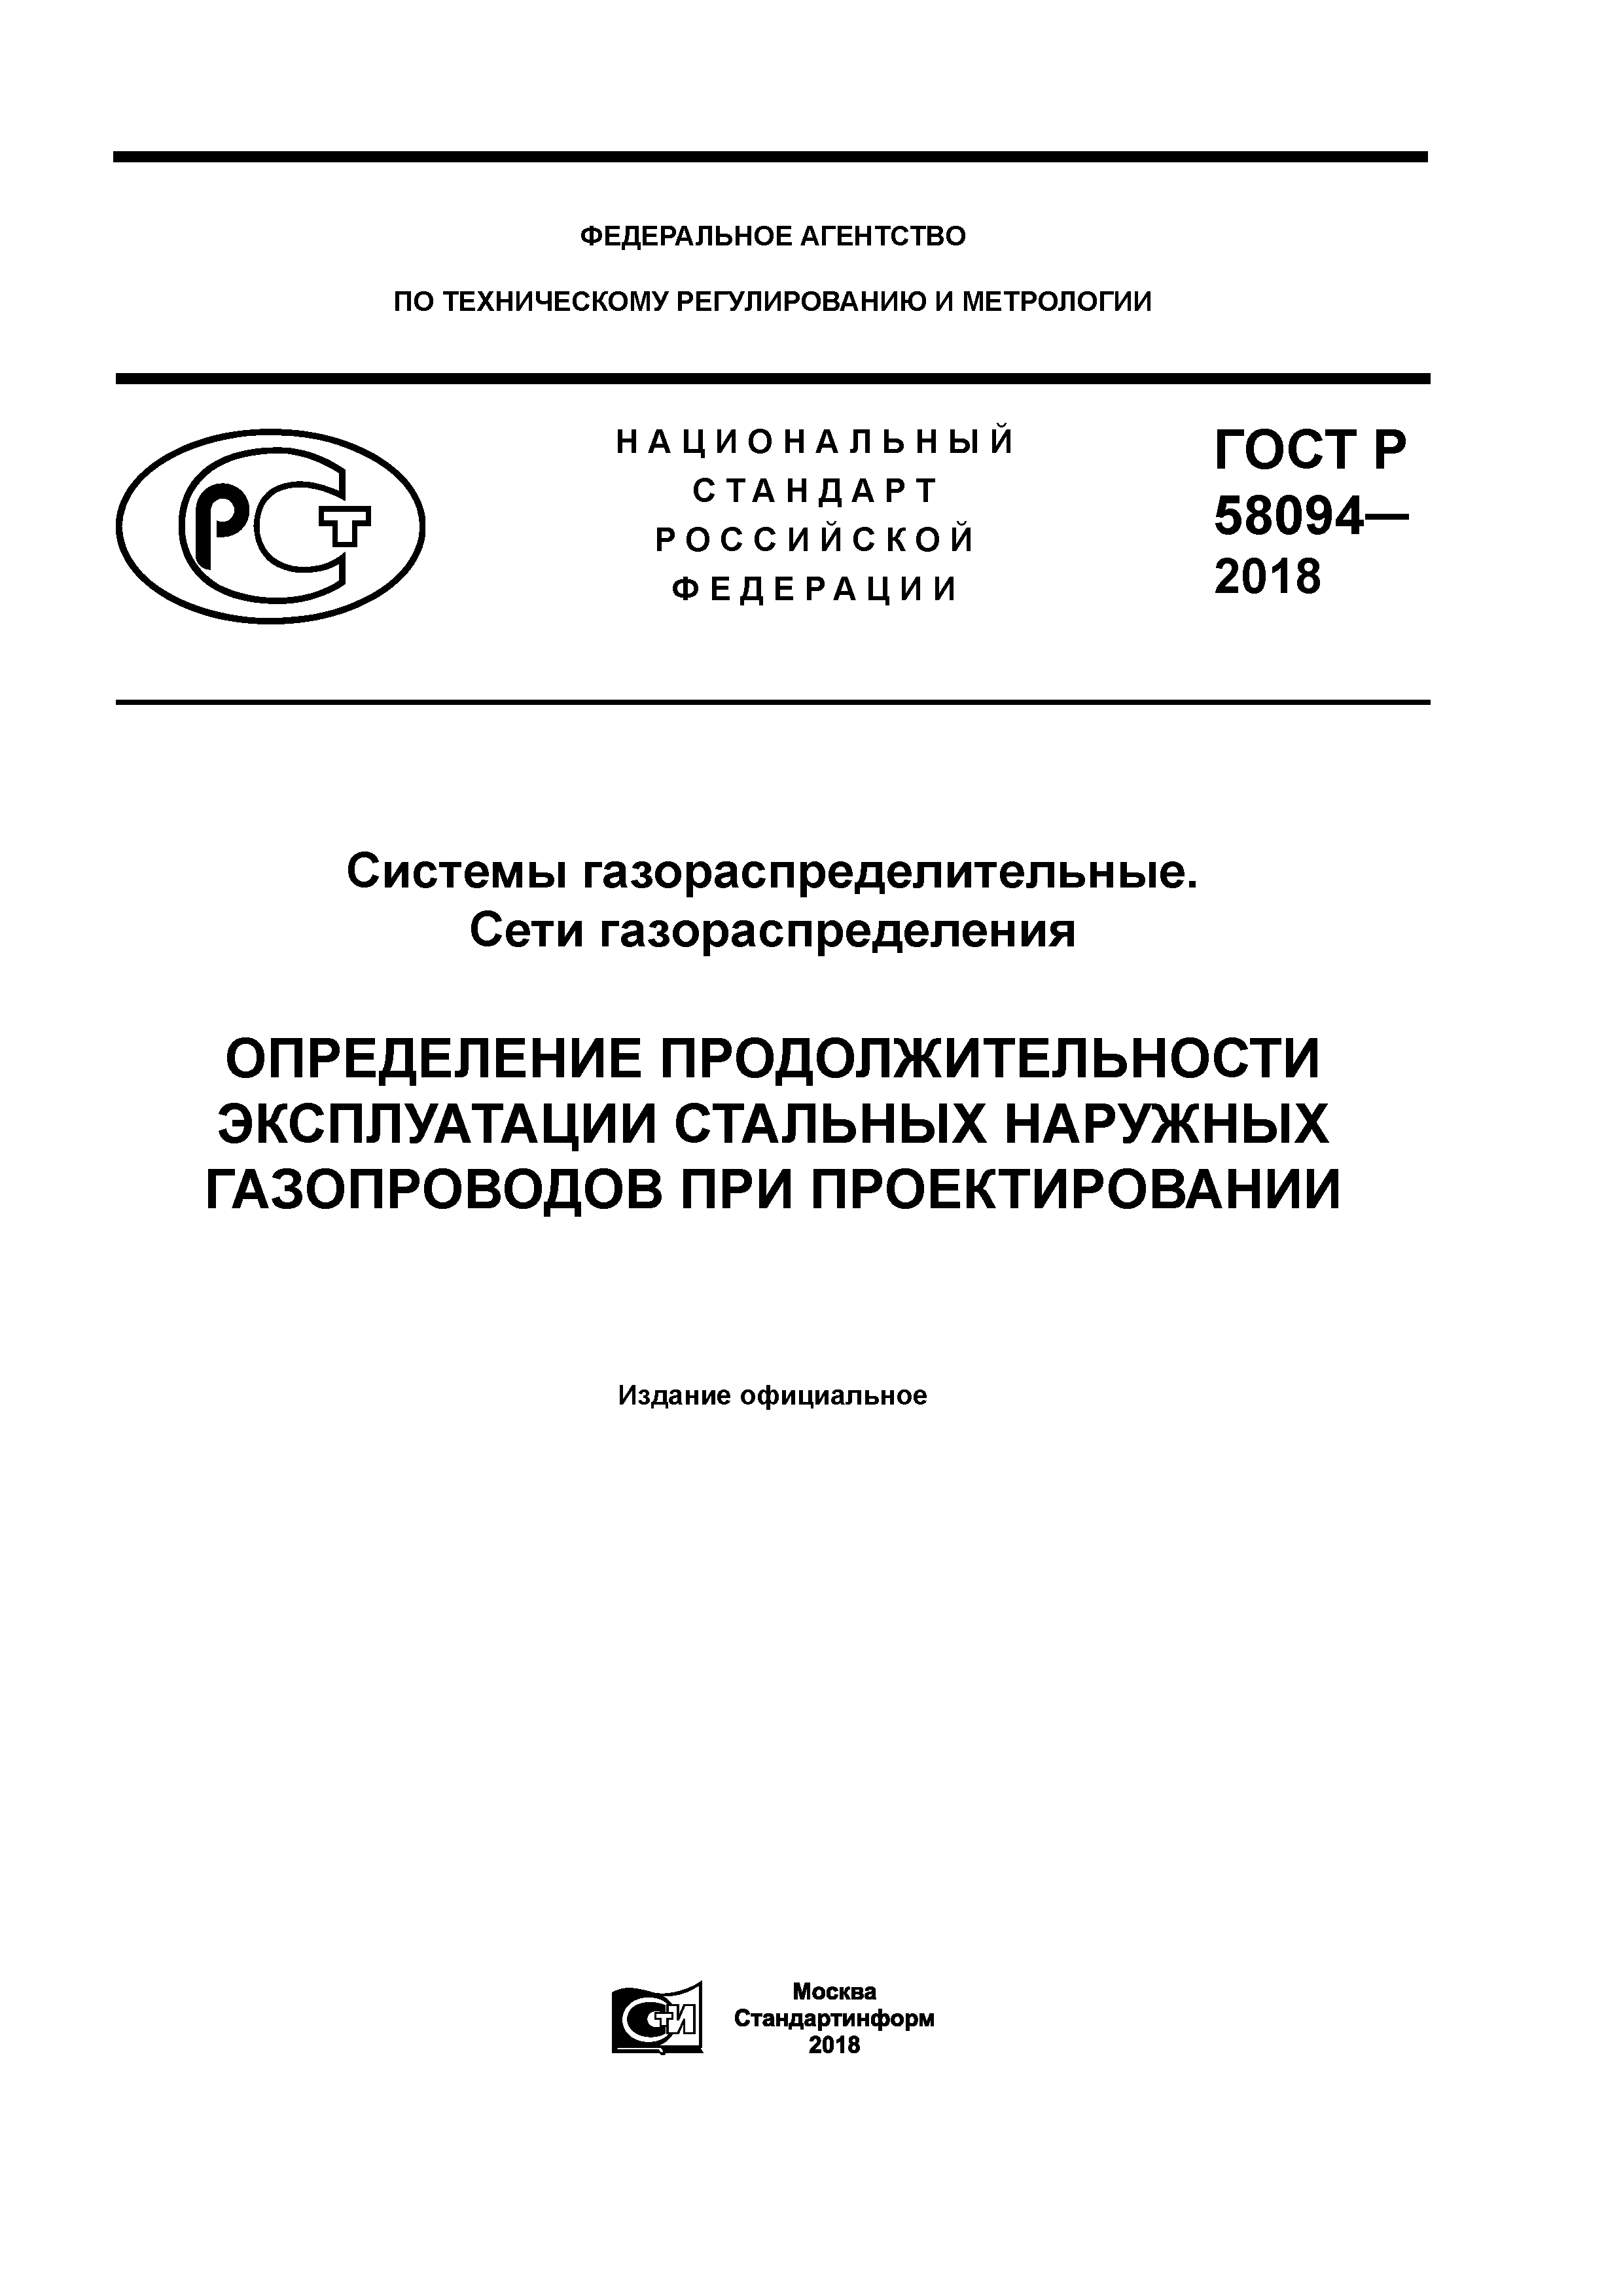 ГОСТ Р 58094-2018